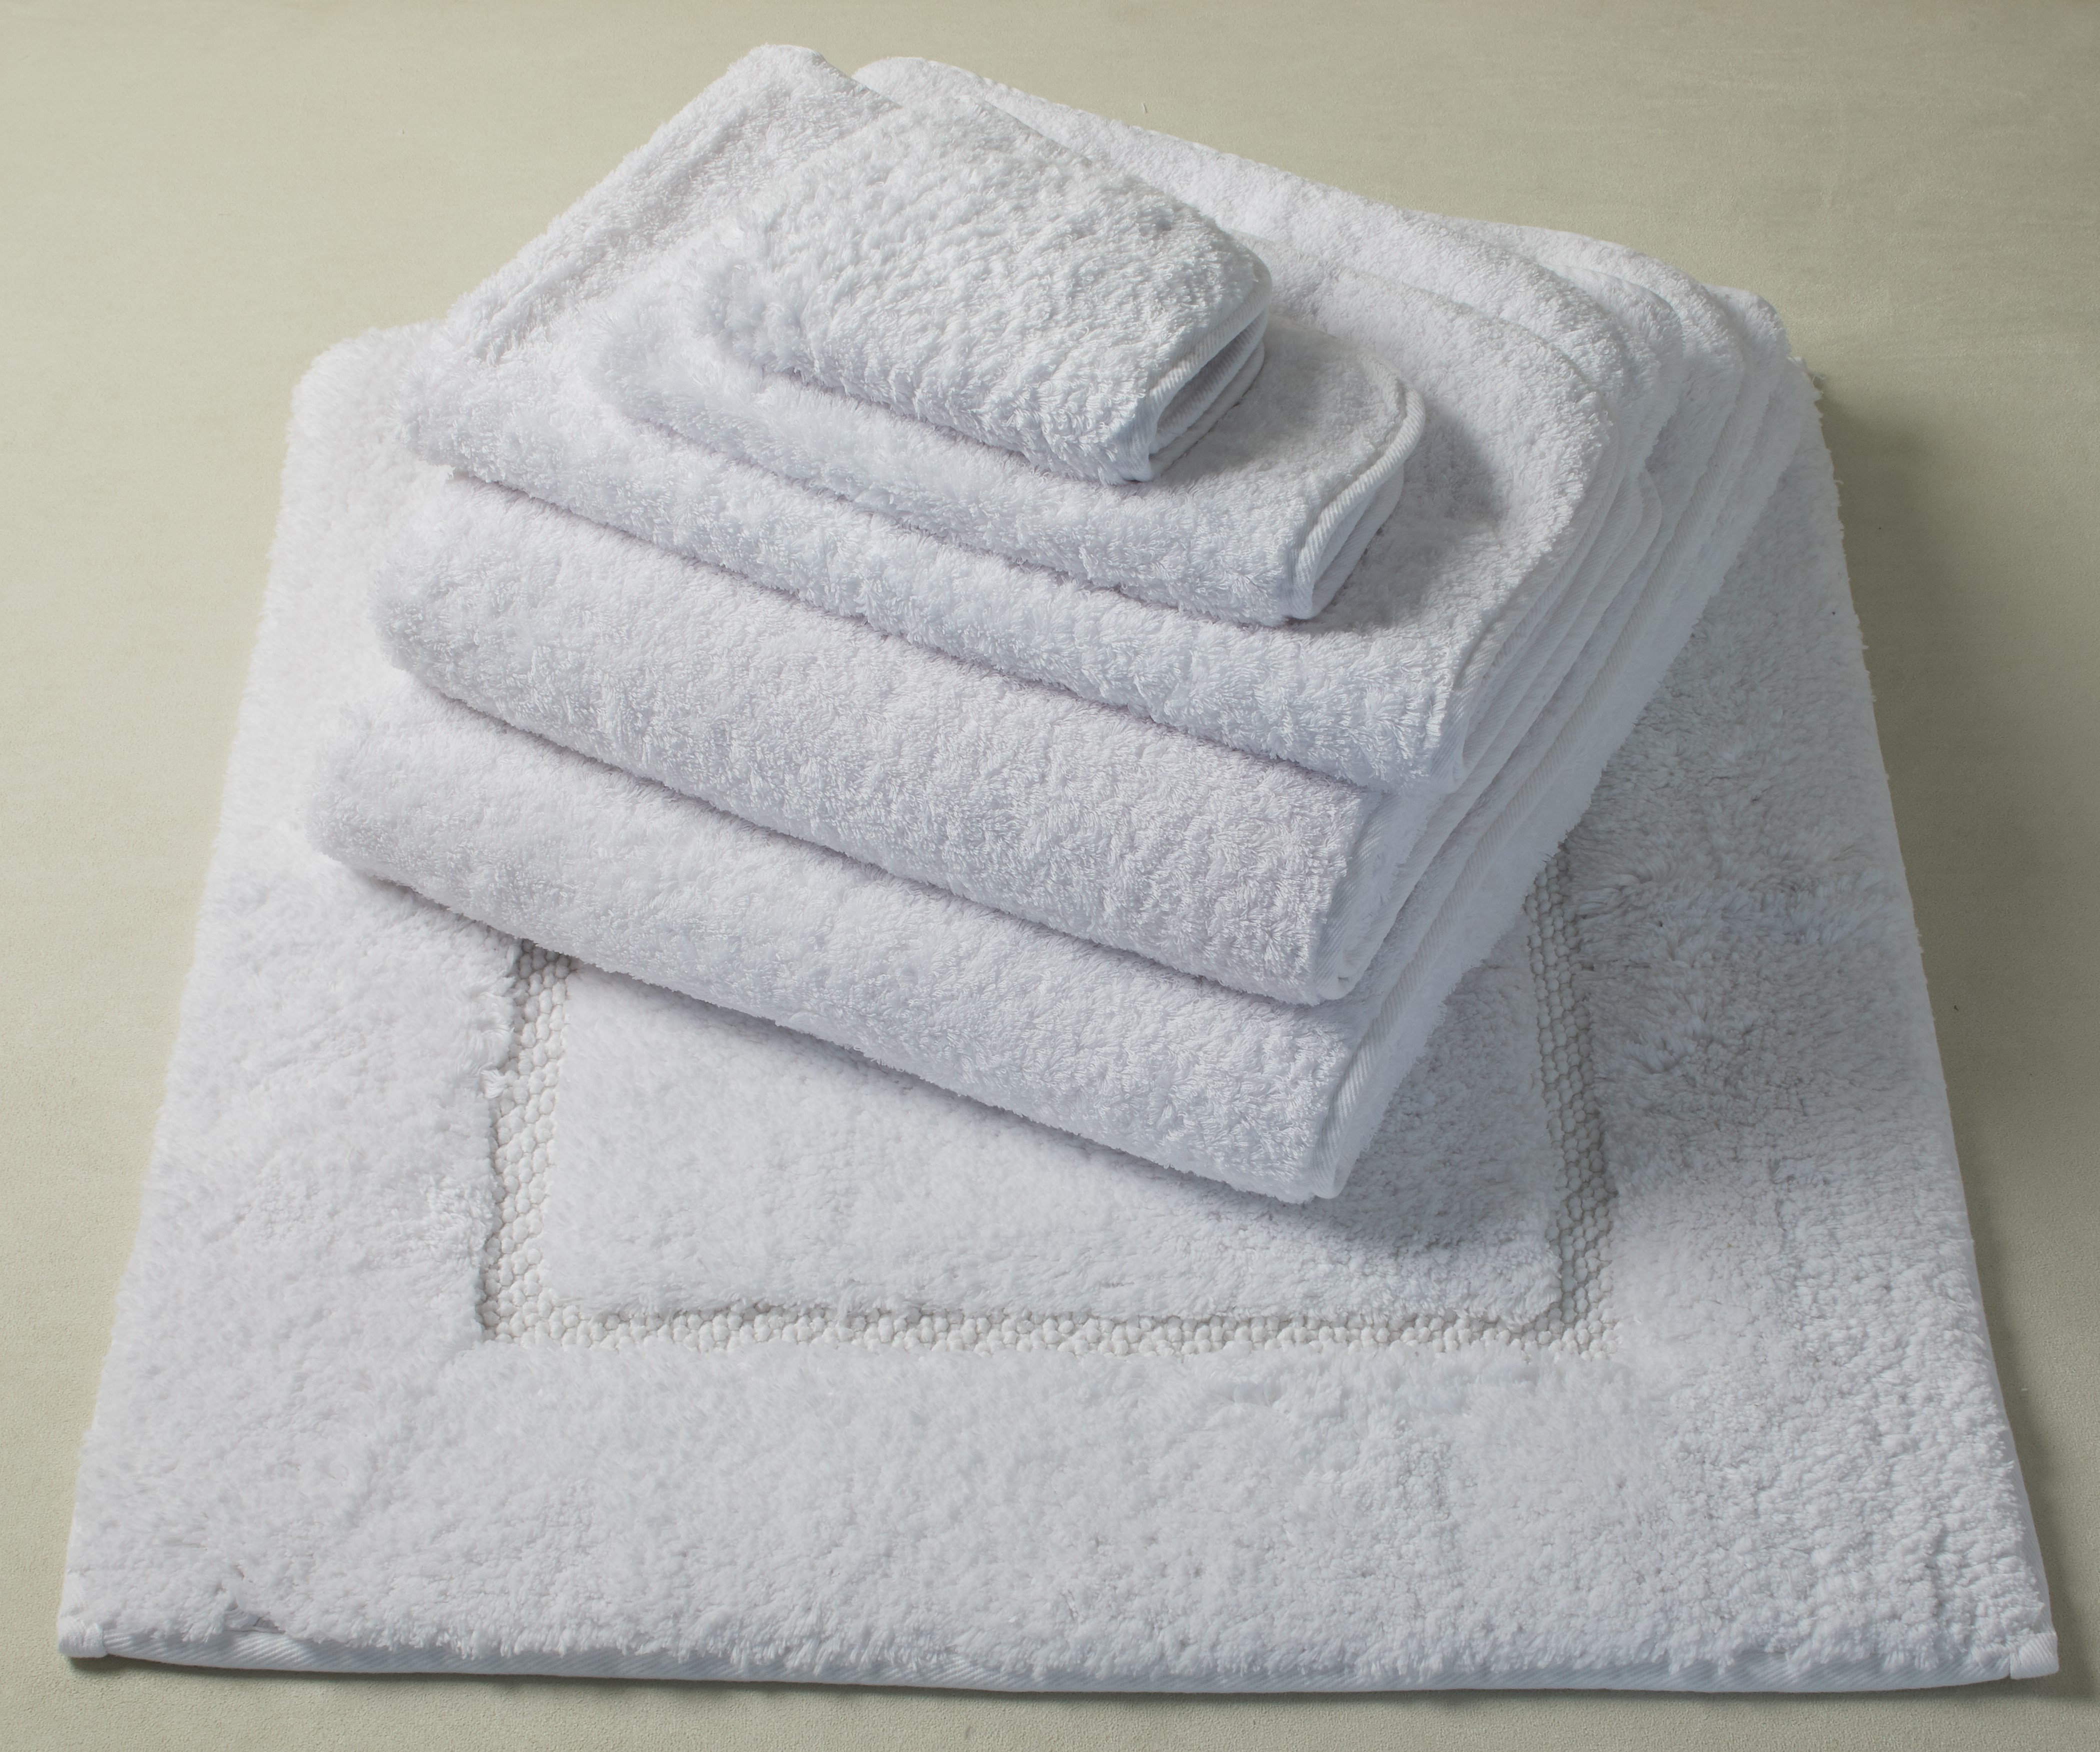 Graccioza Egoist Bath Towel - Available in 7 colors